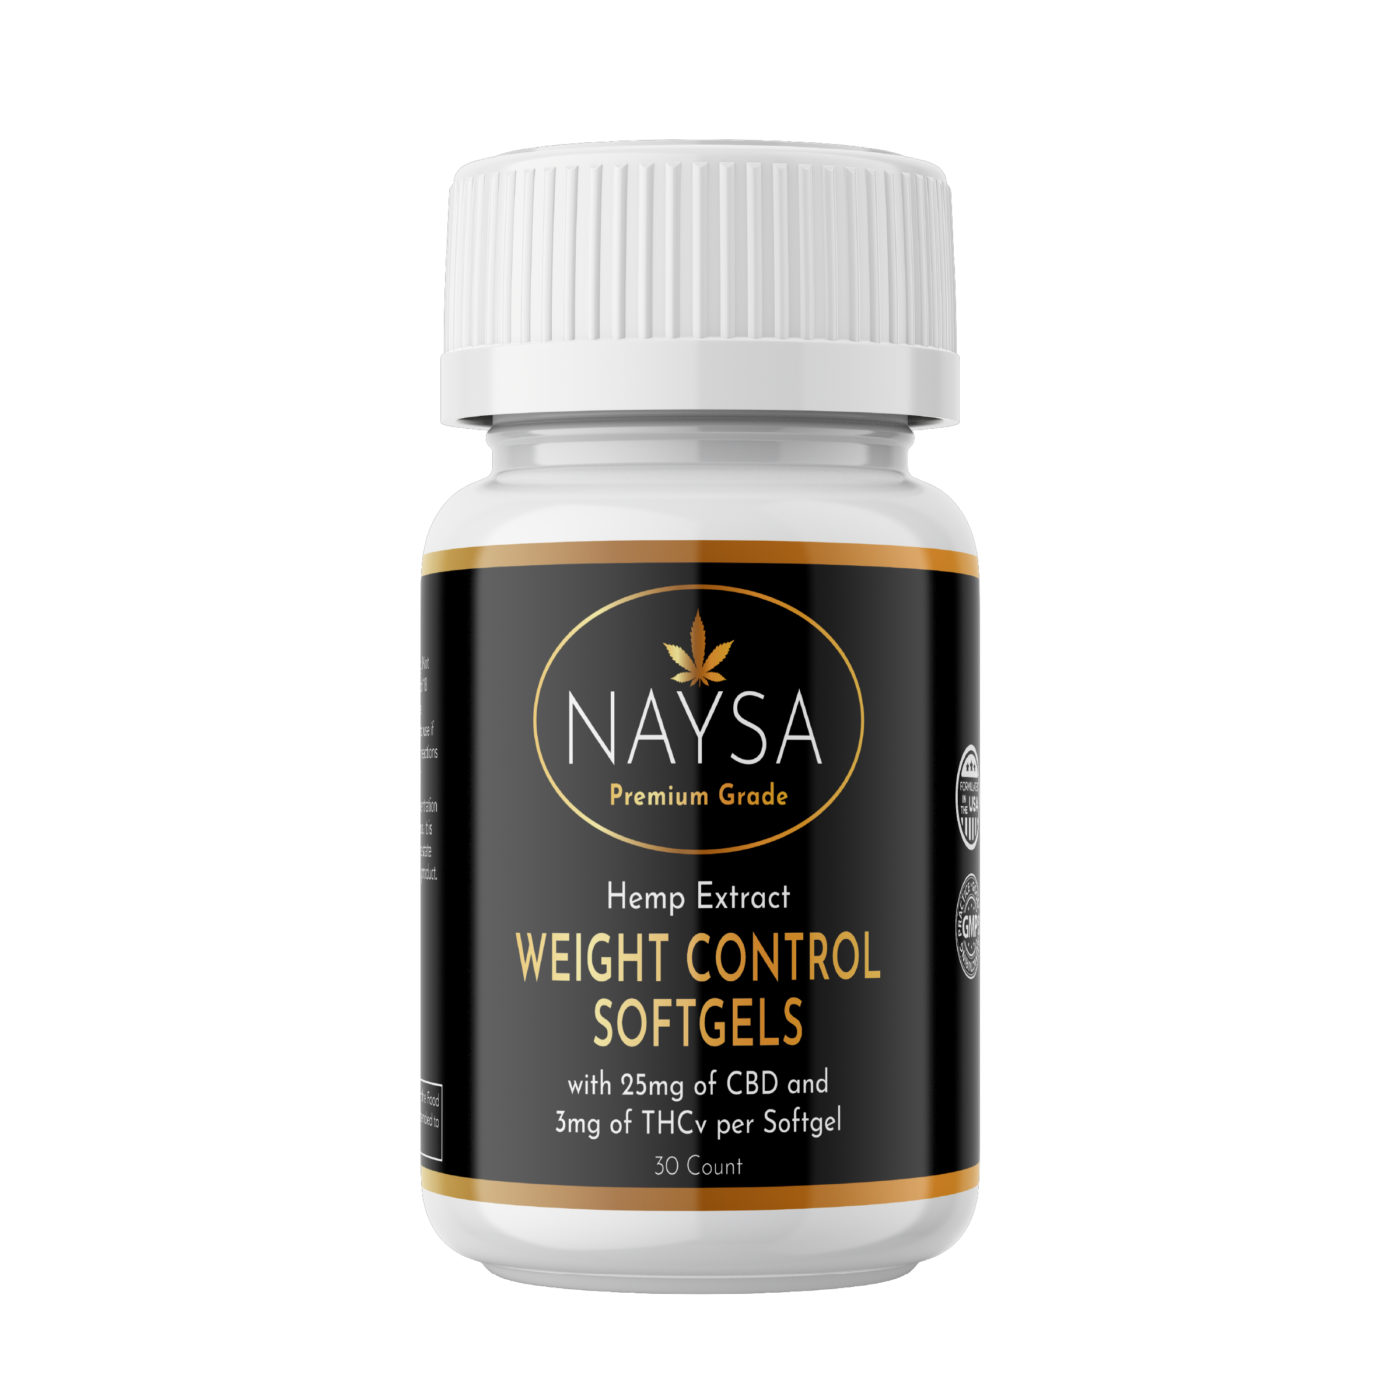 Naysa Weight Control Softgels